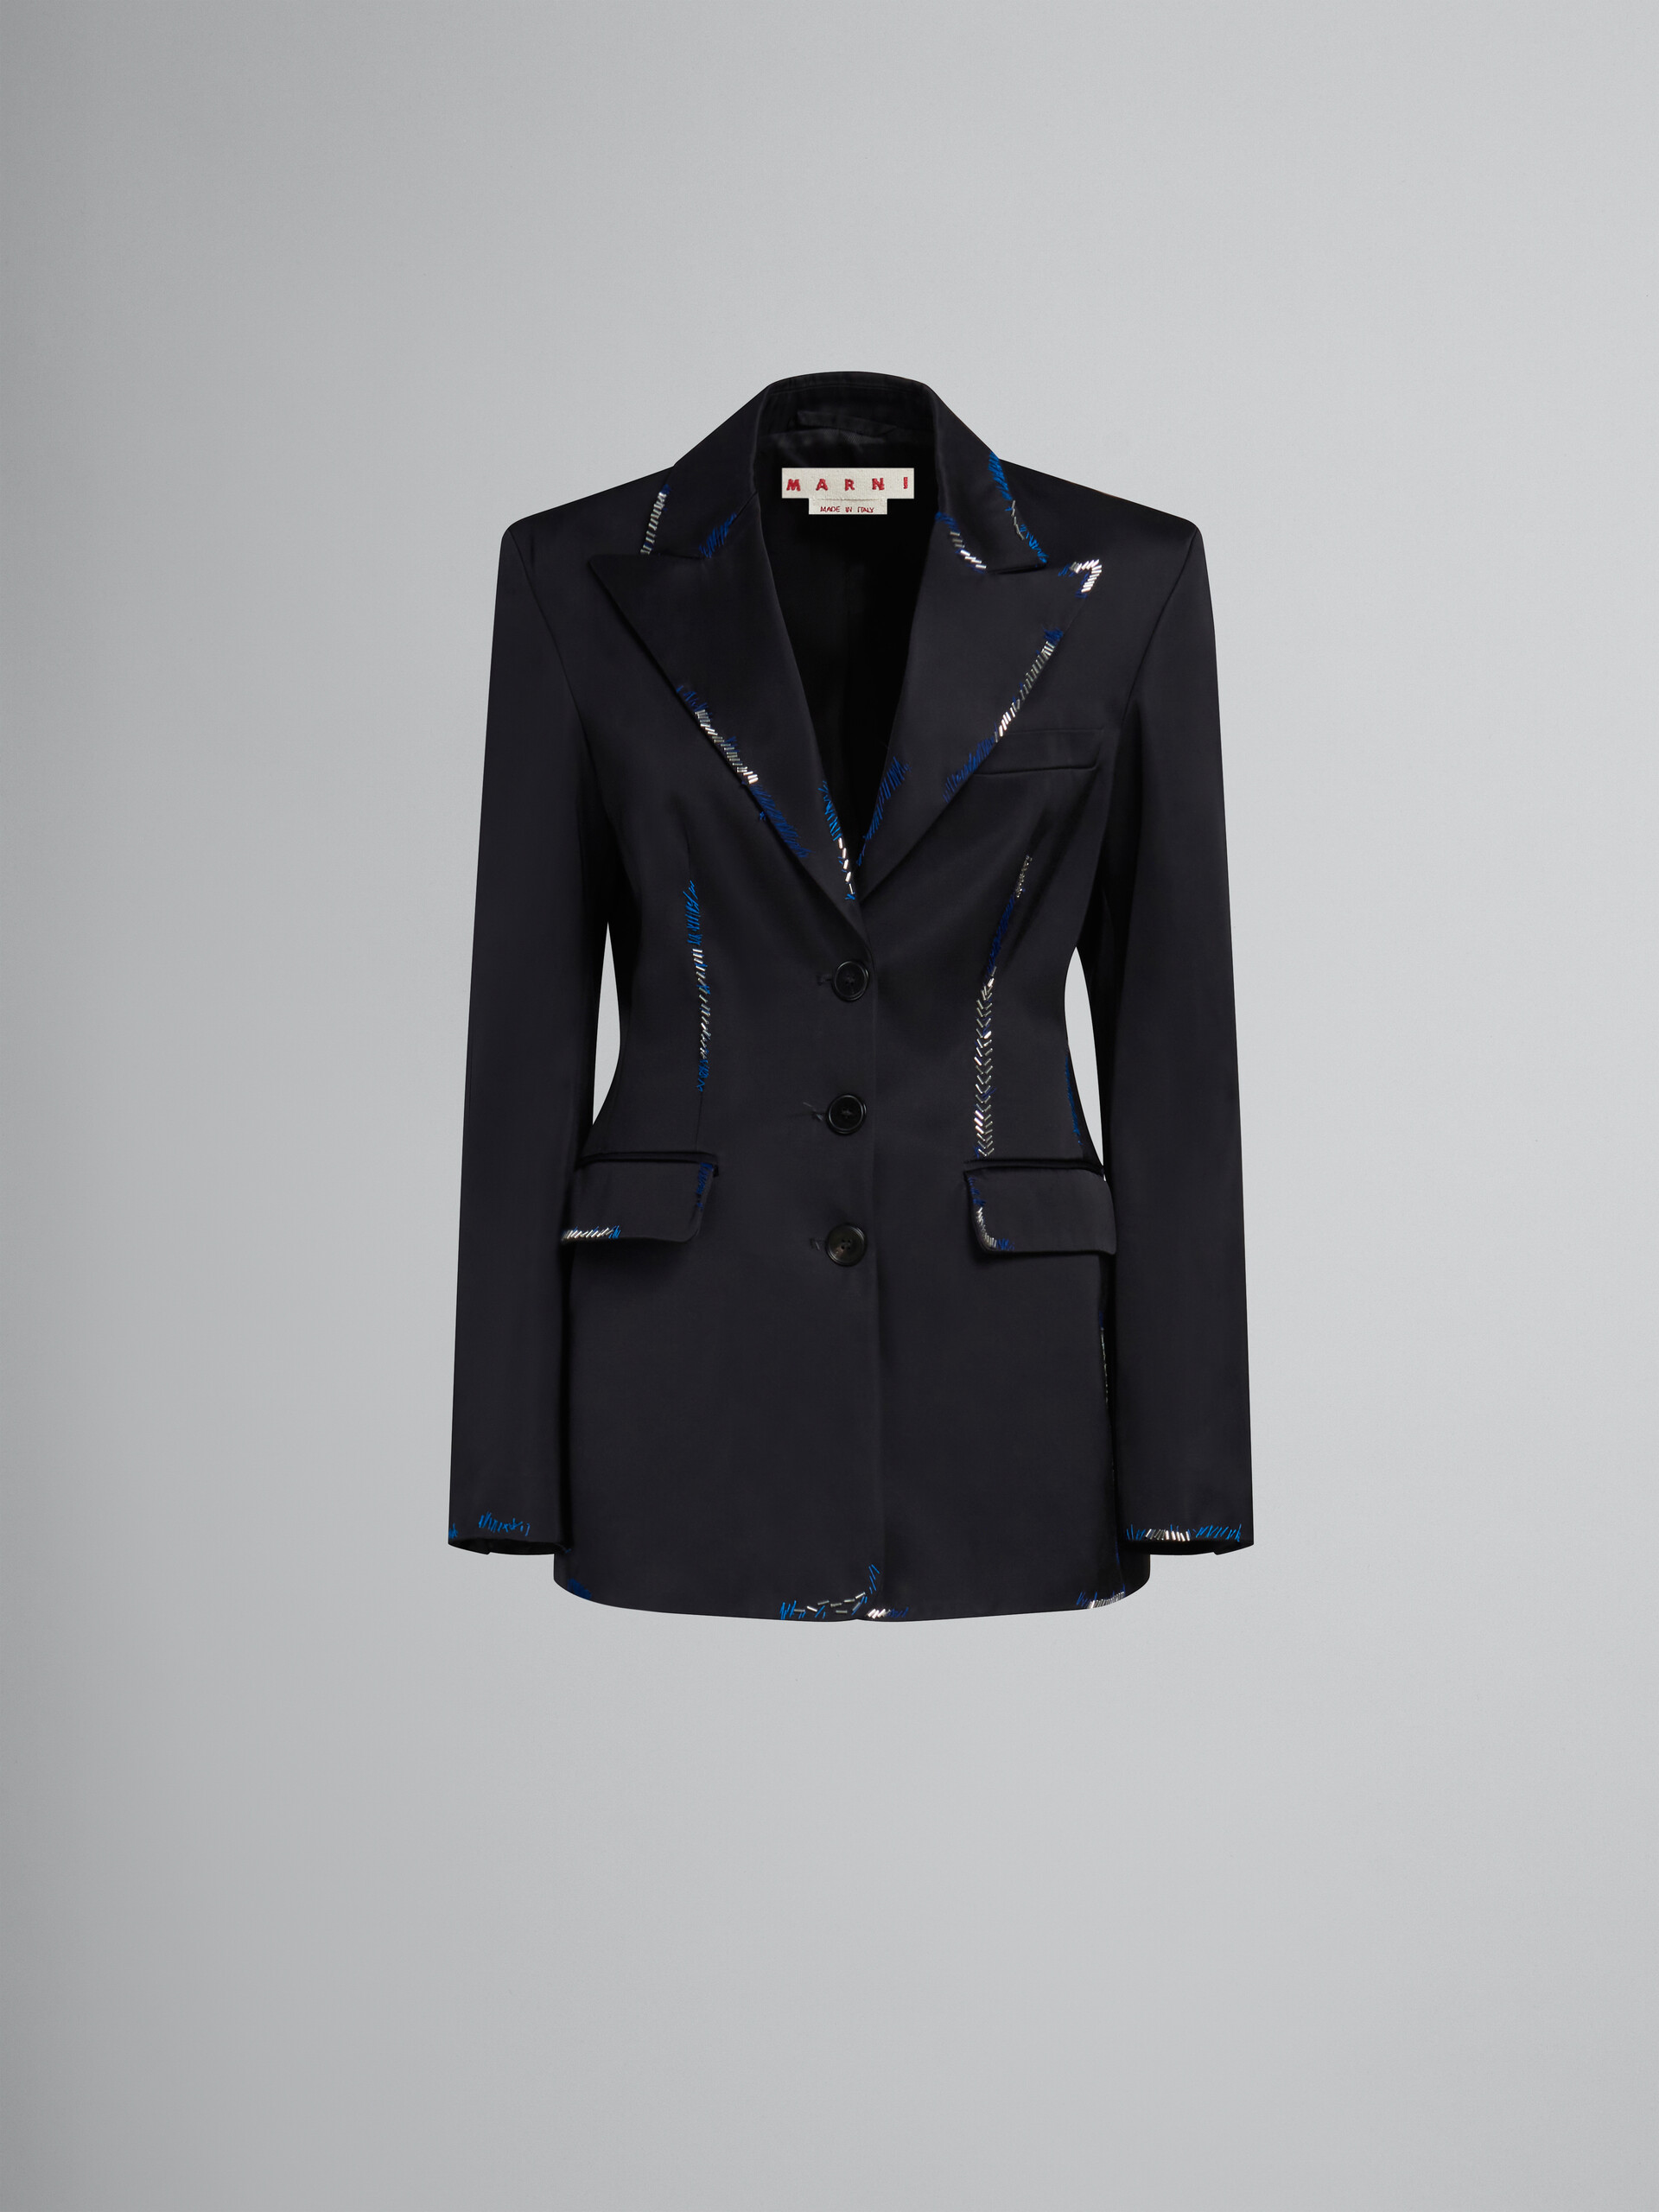 Black duchesse satin jacket with bead mending - Jackets - Image 1